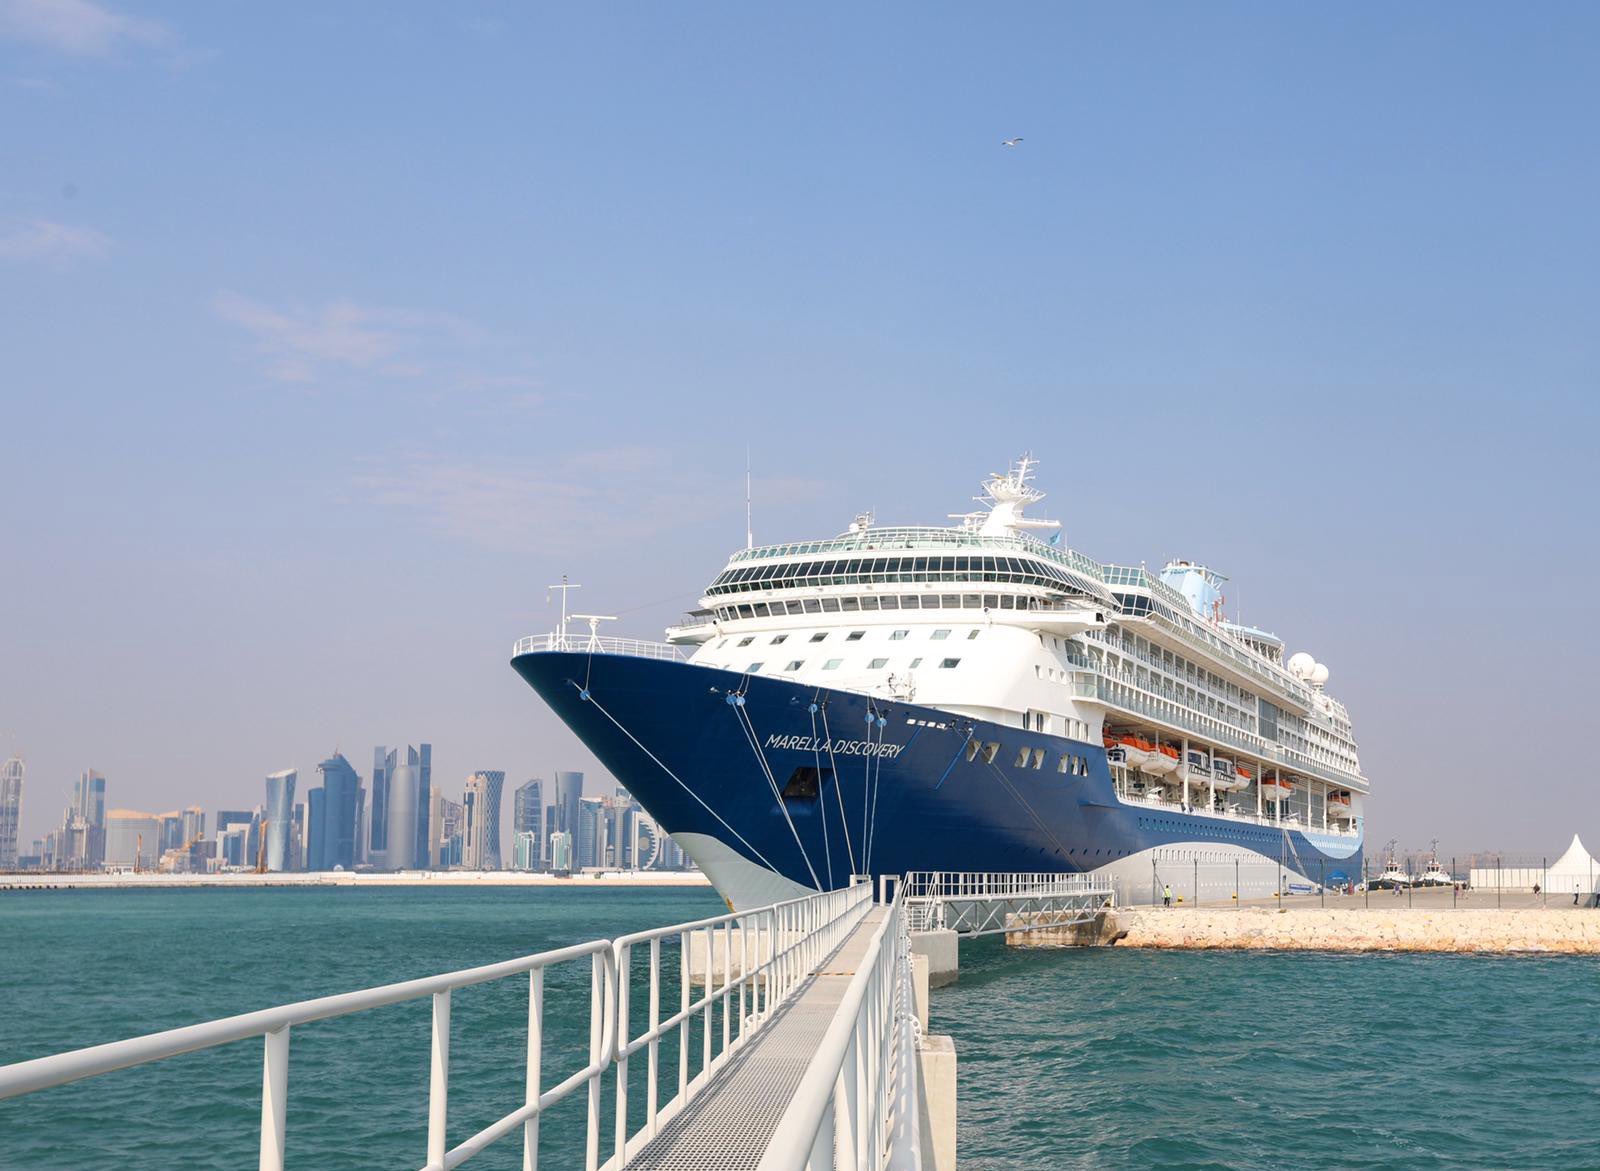 Qatar Tourism: 58,000 Passengers Arrive in Doha in First Half of Cruise Season